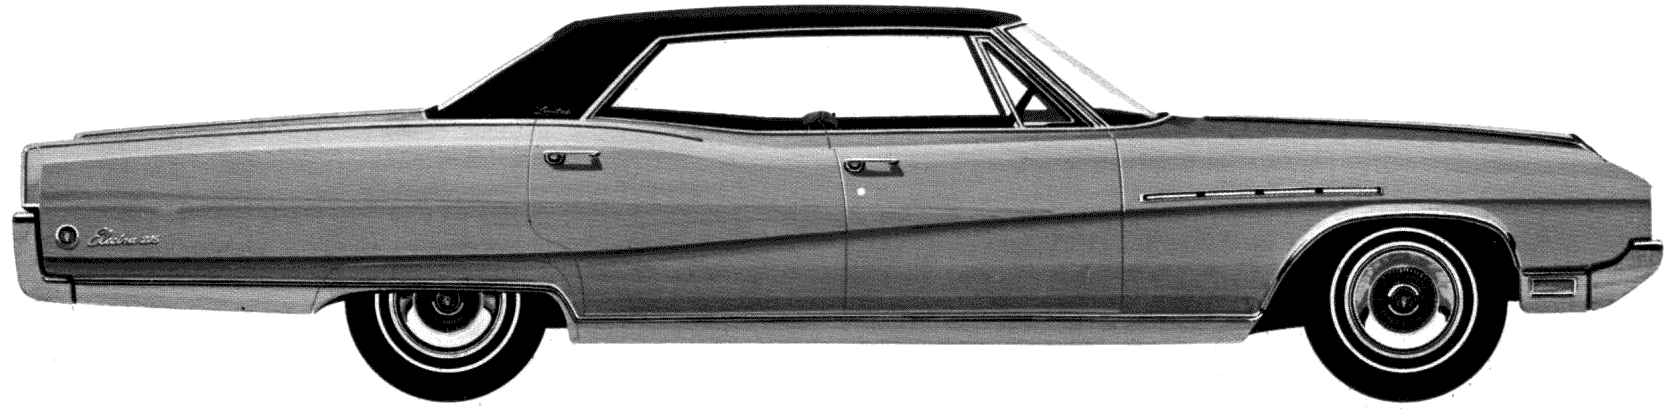 Car Buick Electra 225 Limited 4-Door Hardtop 1968 